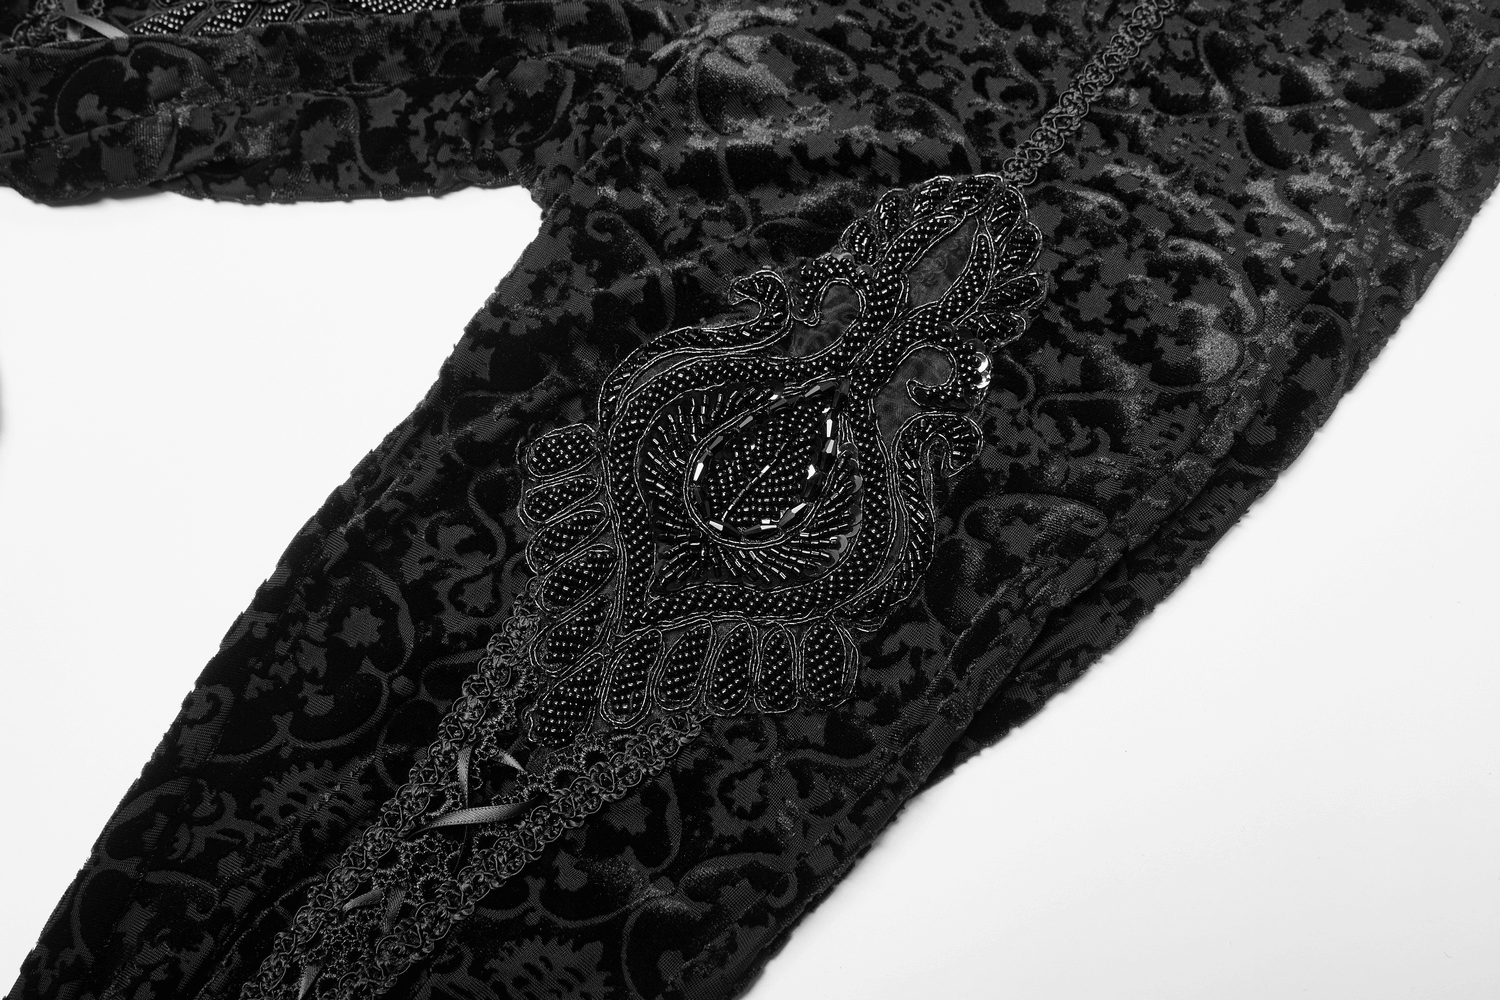 Black Gothic Velvet Leggings with Floral Lace Detail